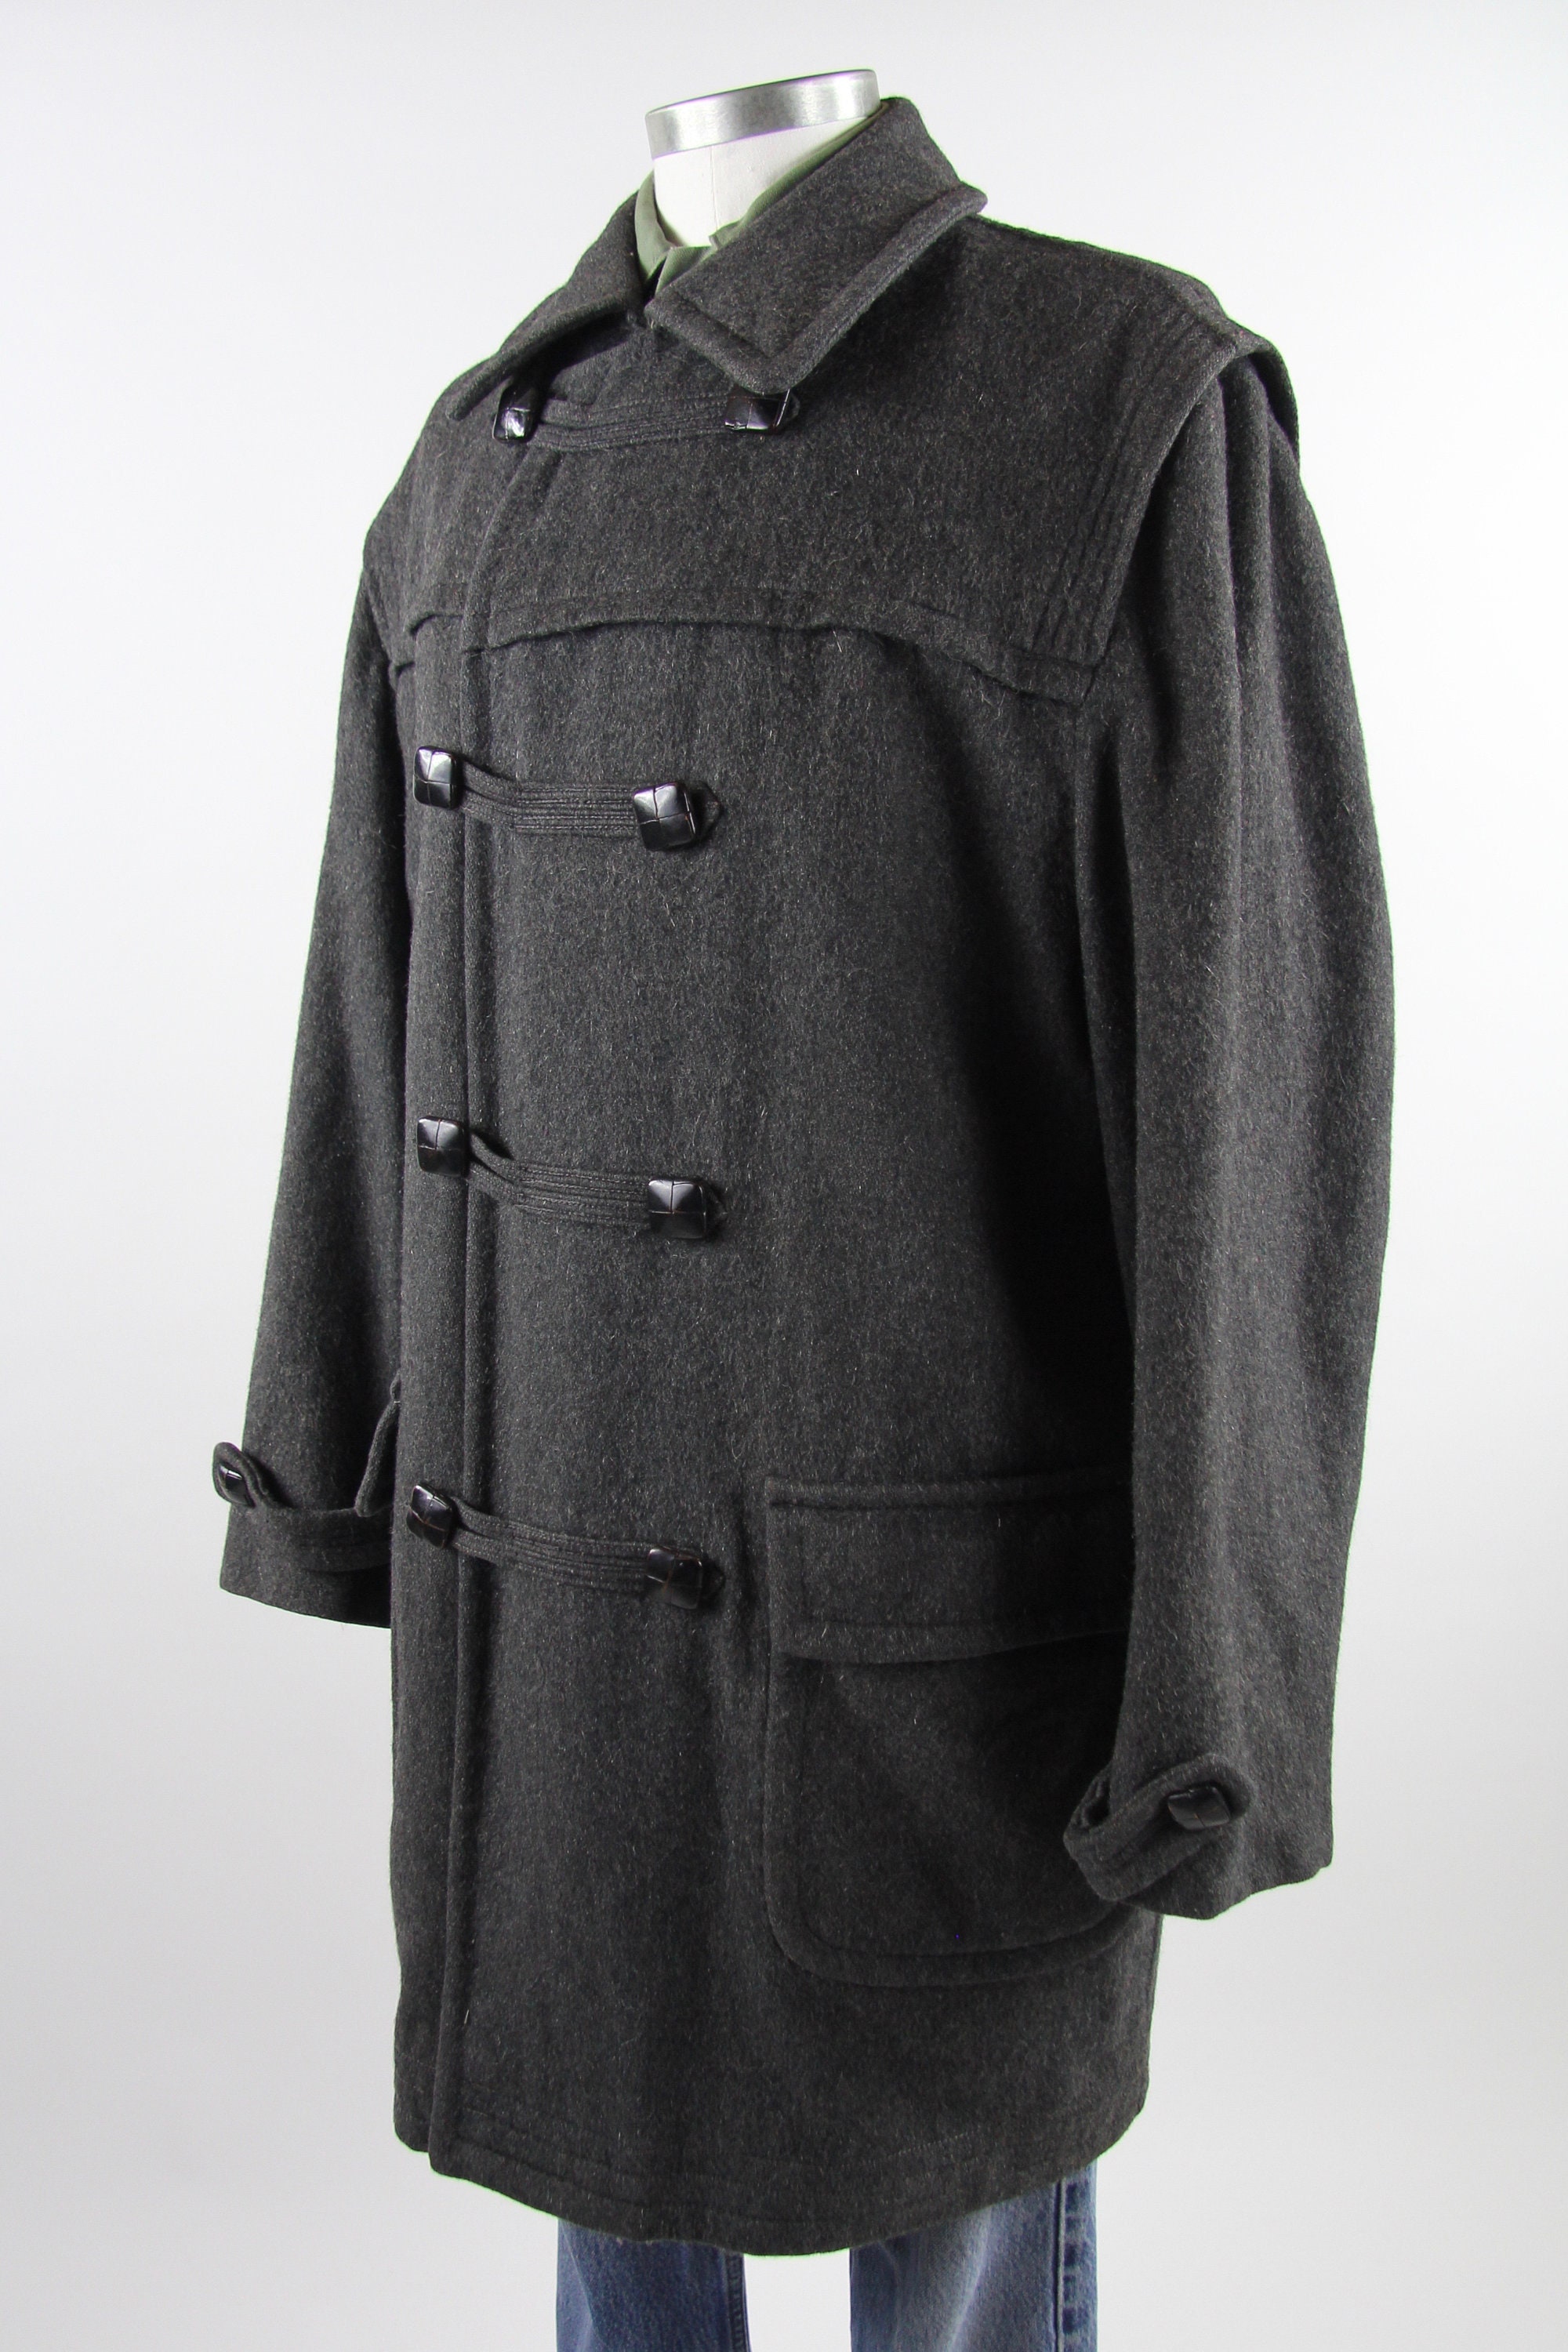 Men's Grey Peacoat Wool Heavy Winter Coat by Loden Vintage Size Large ...